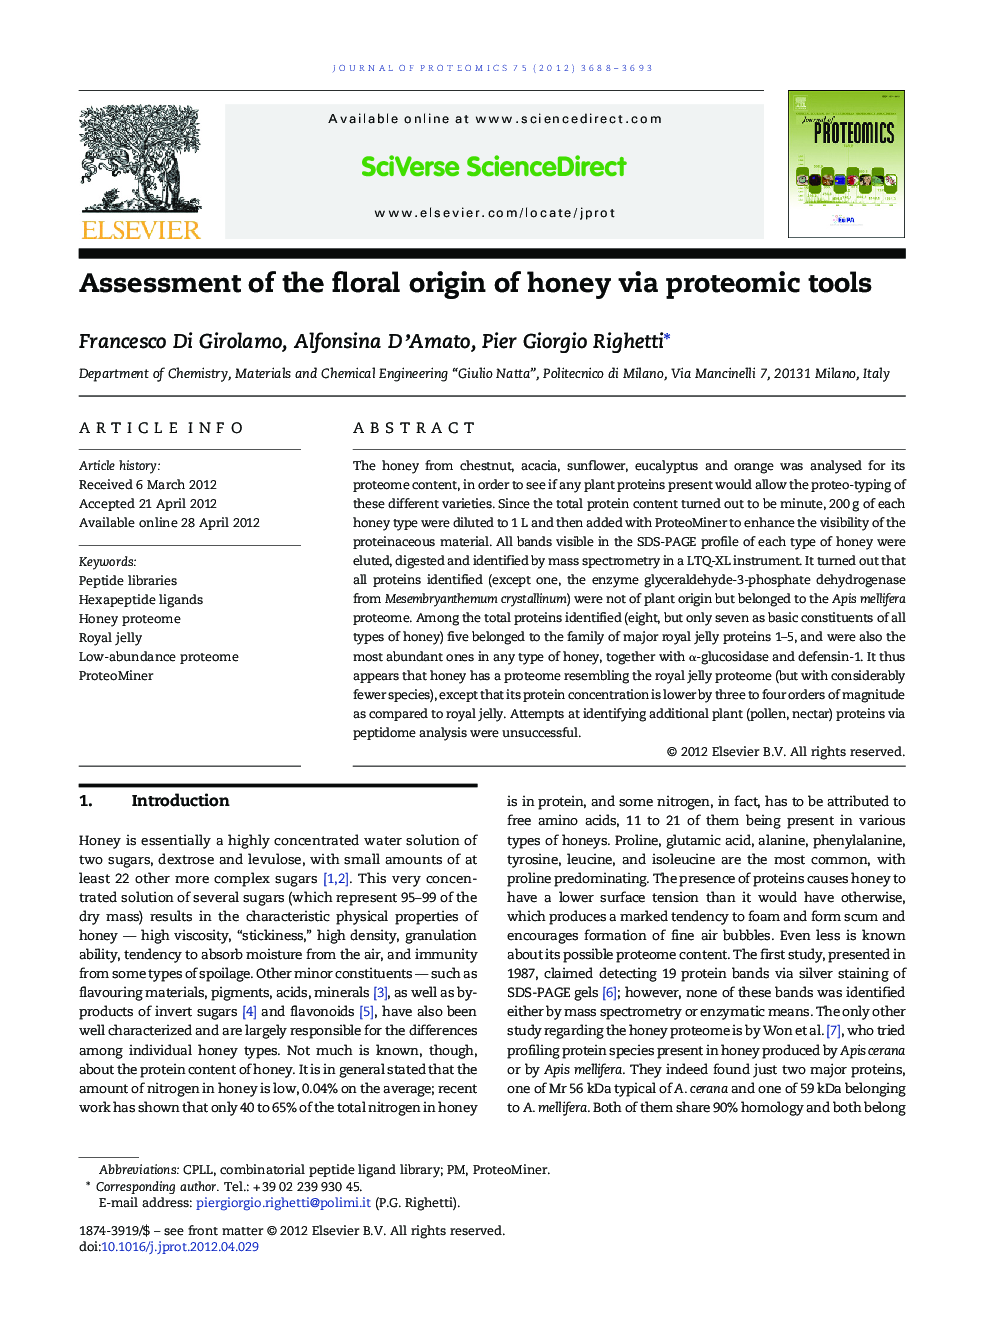 Assessment of the floral origin of honey via proteomic tools